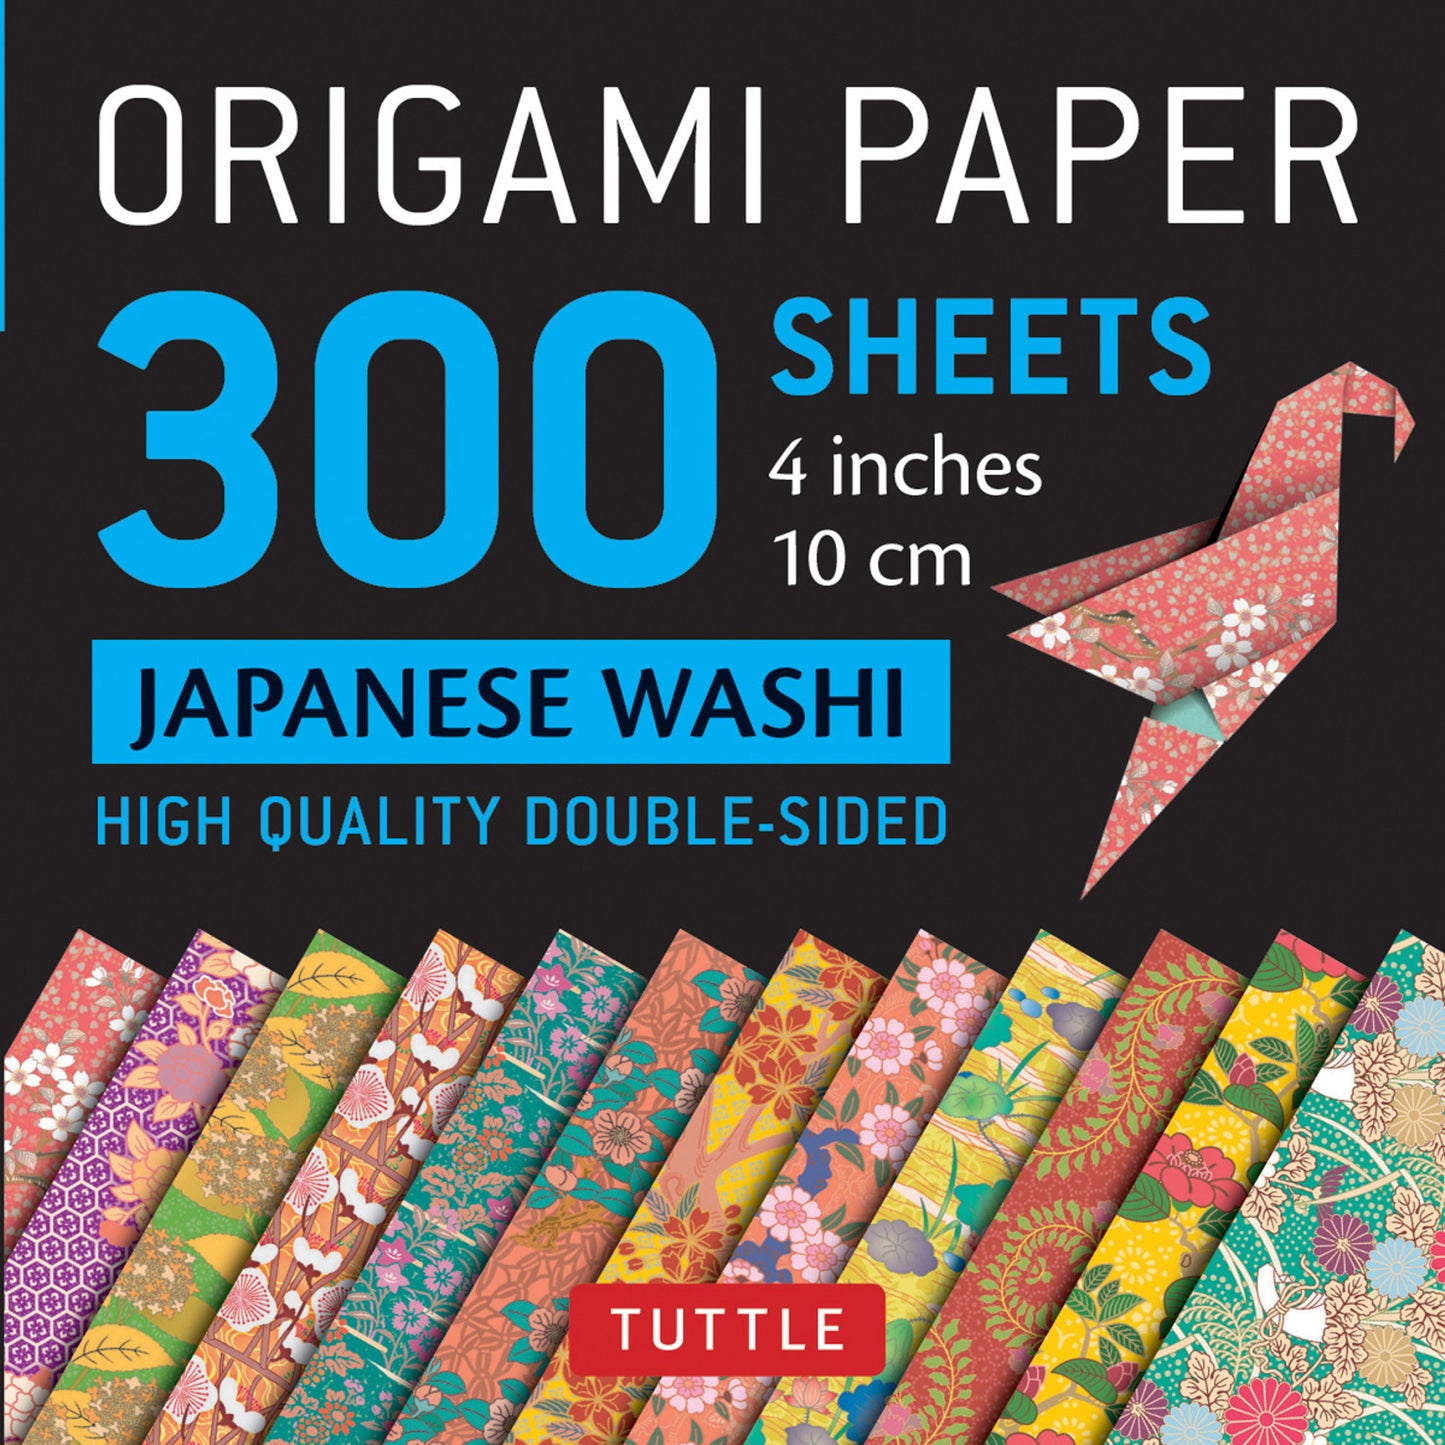 Origami Paper 300 sheets Japanese Washi Patterns (10cm)